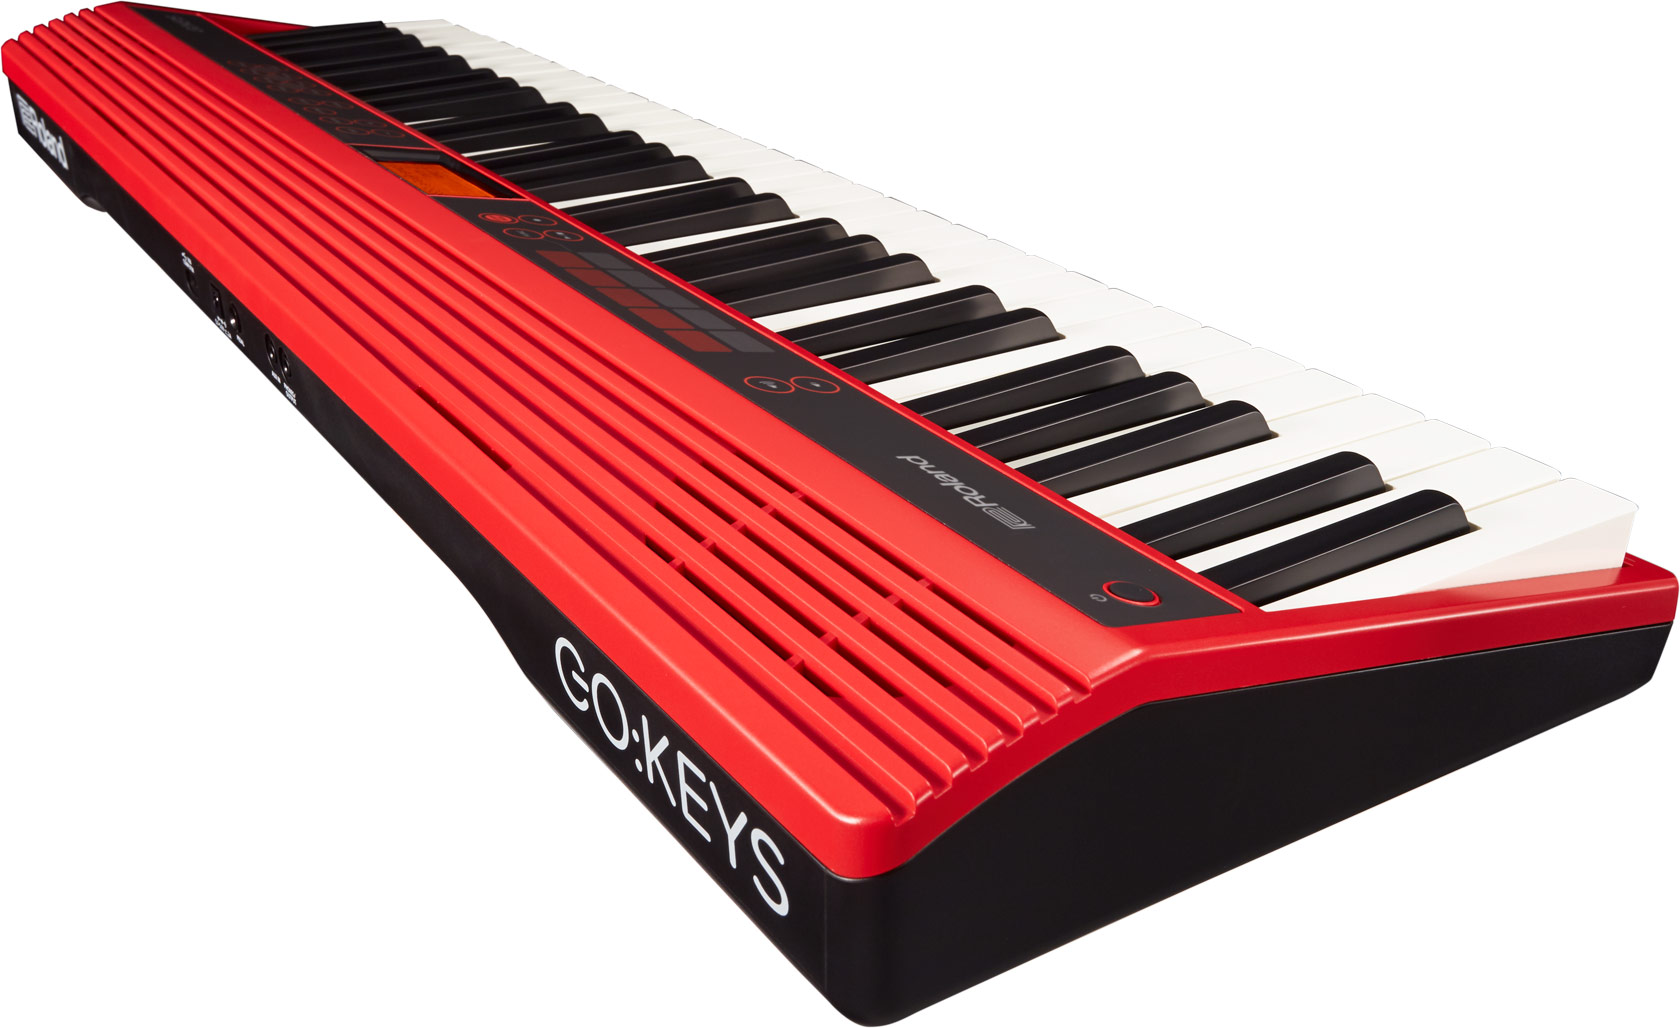 Roland - GO:KEYS | Music Creation Keyboard (GO-61KL)